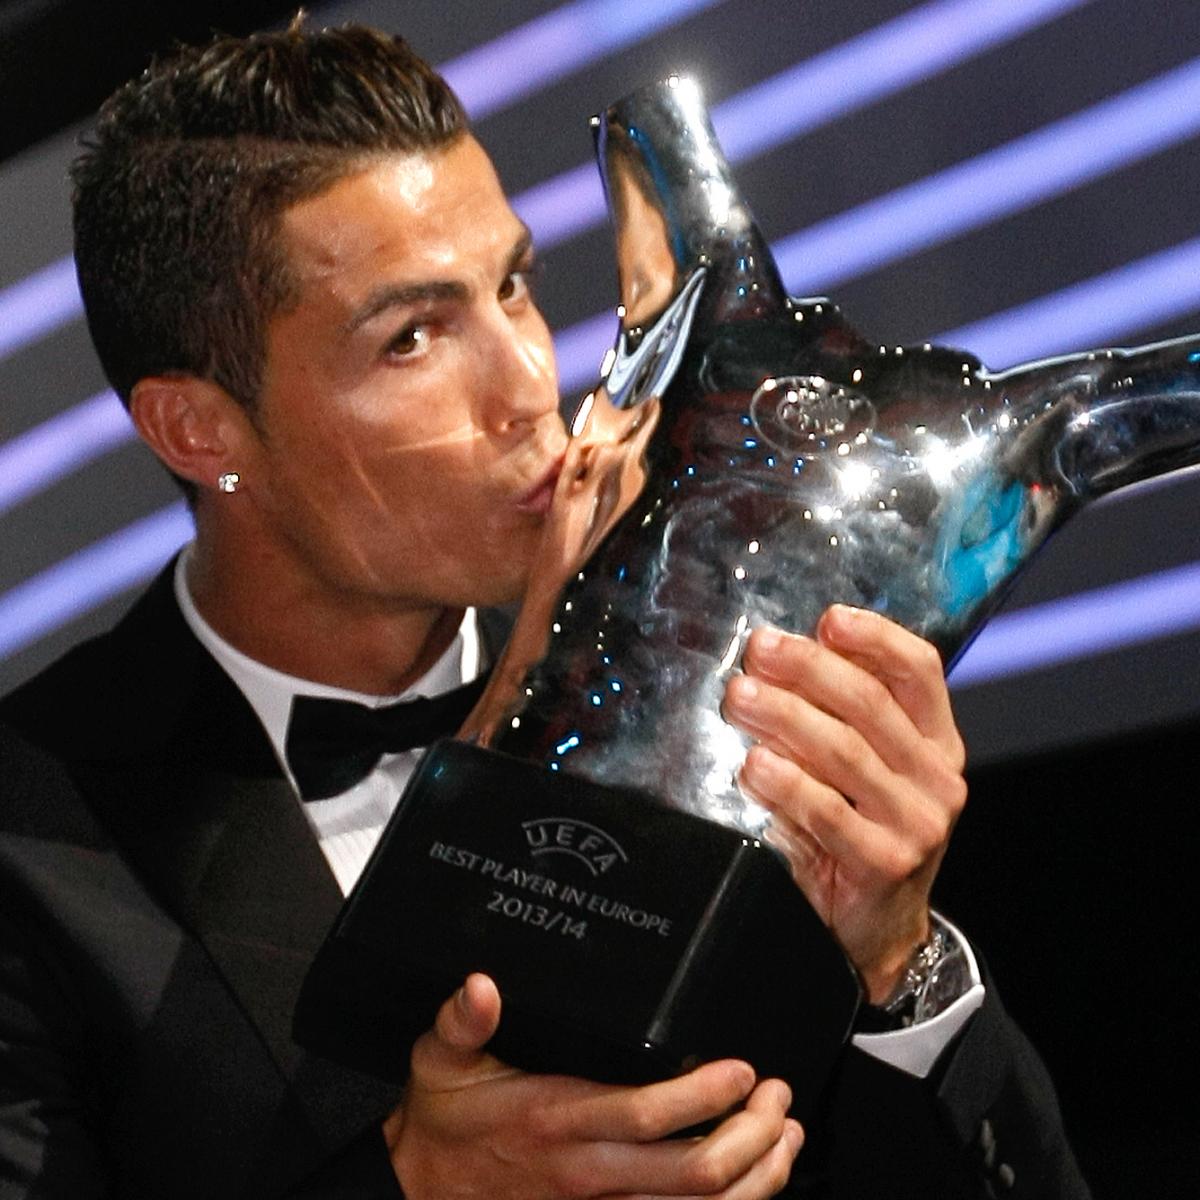 Lionel Messi Adidas Golden Ball Award Winner In FIFA World Cup